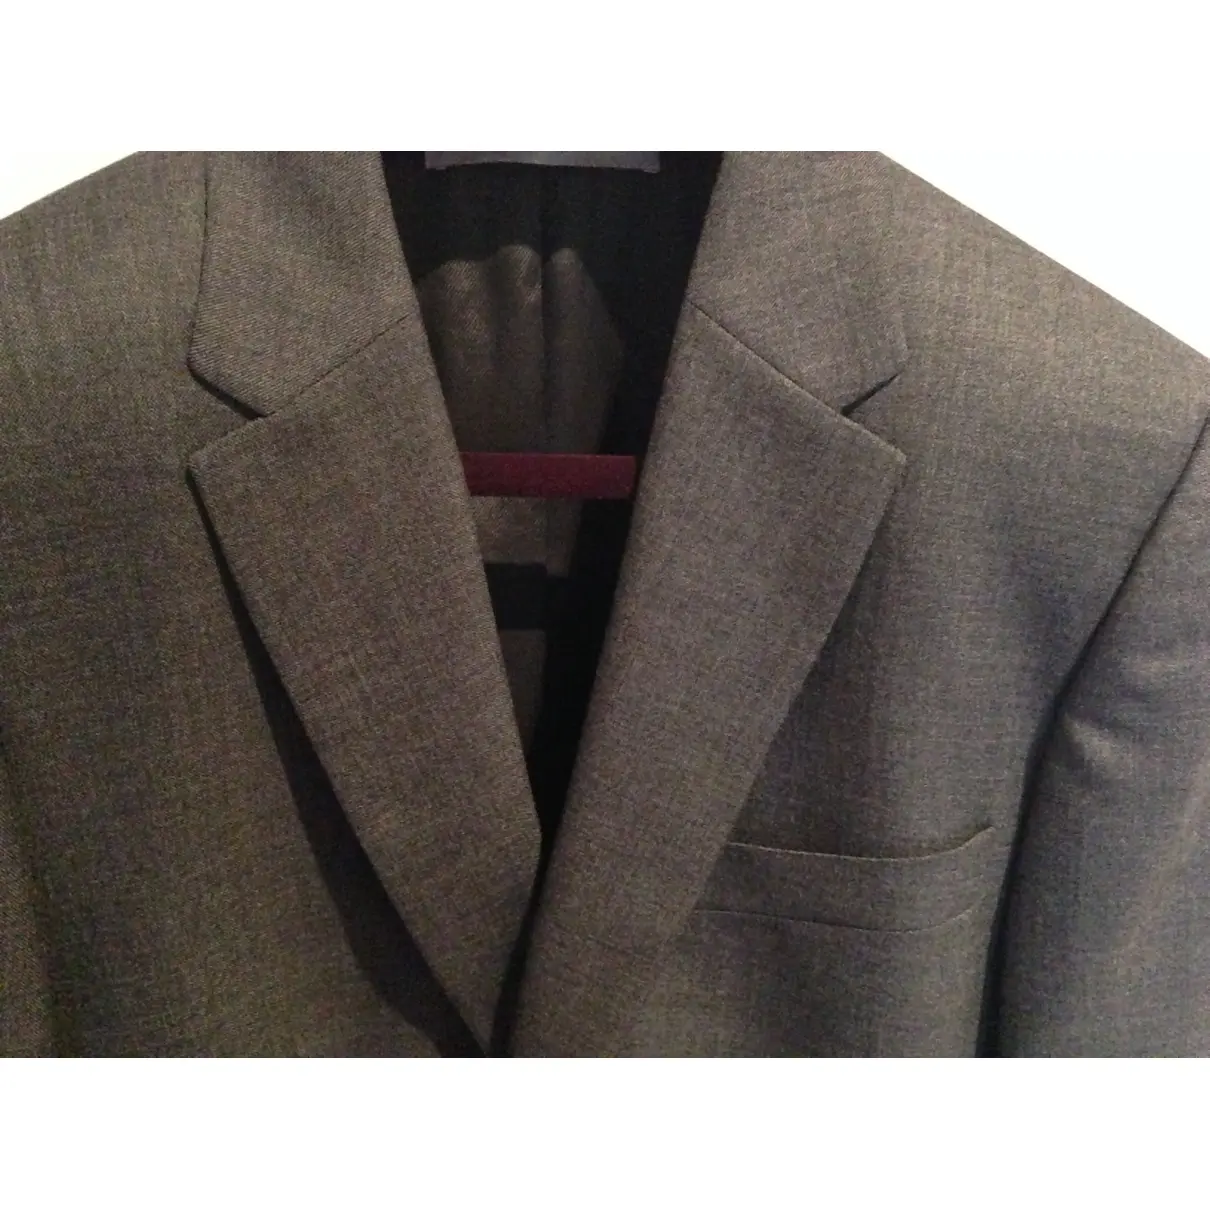 Stella McCartney Wool suit for sale